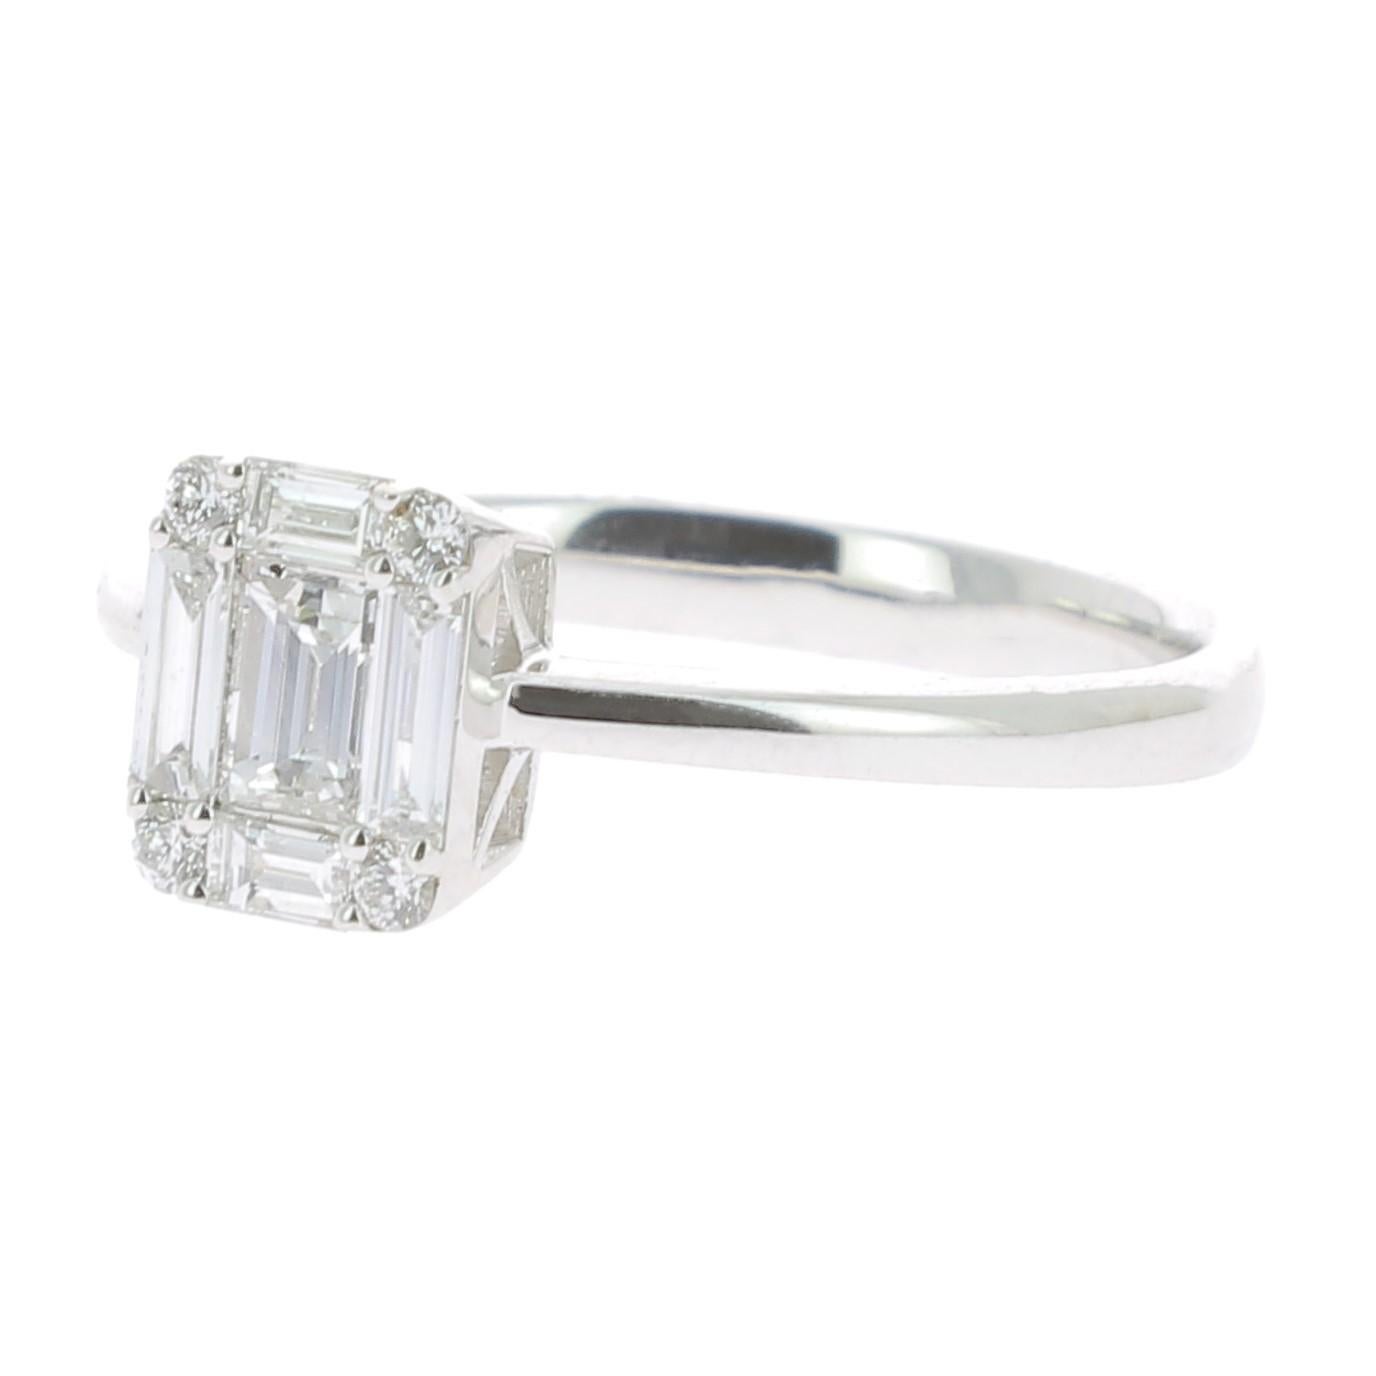 Round Cut 0.48 Carat GVS Diamonds Ring Round/Baguette Diamonds 18K White Gold